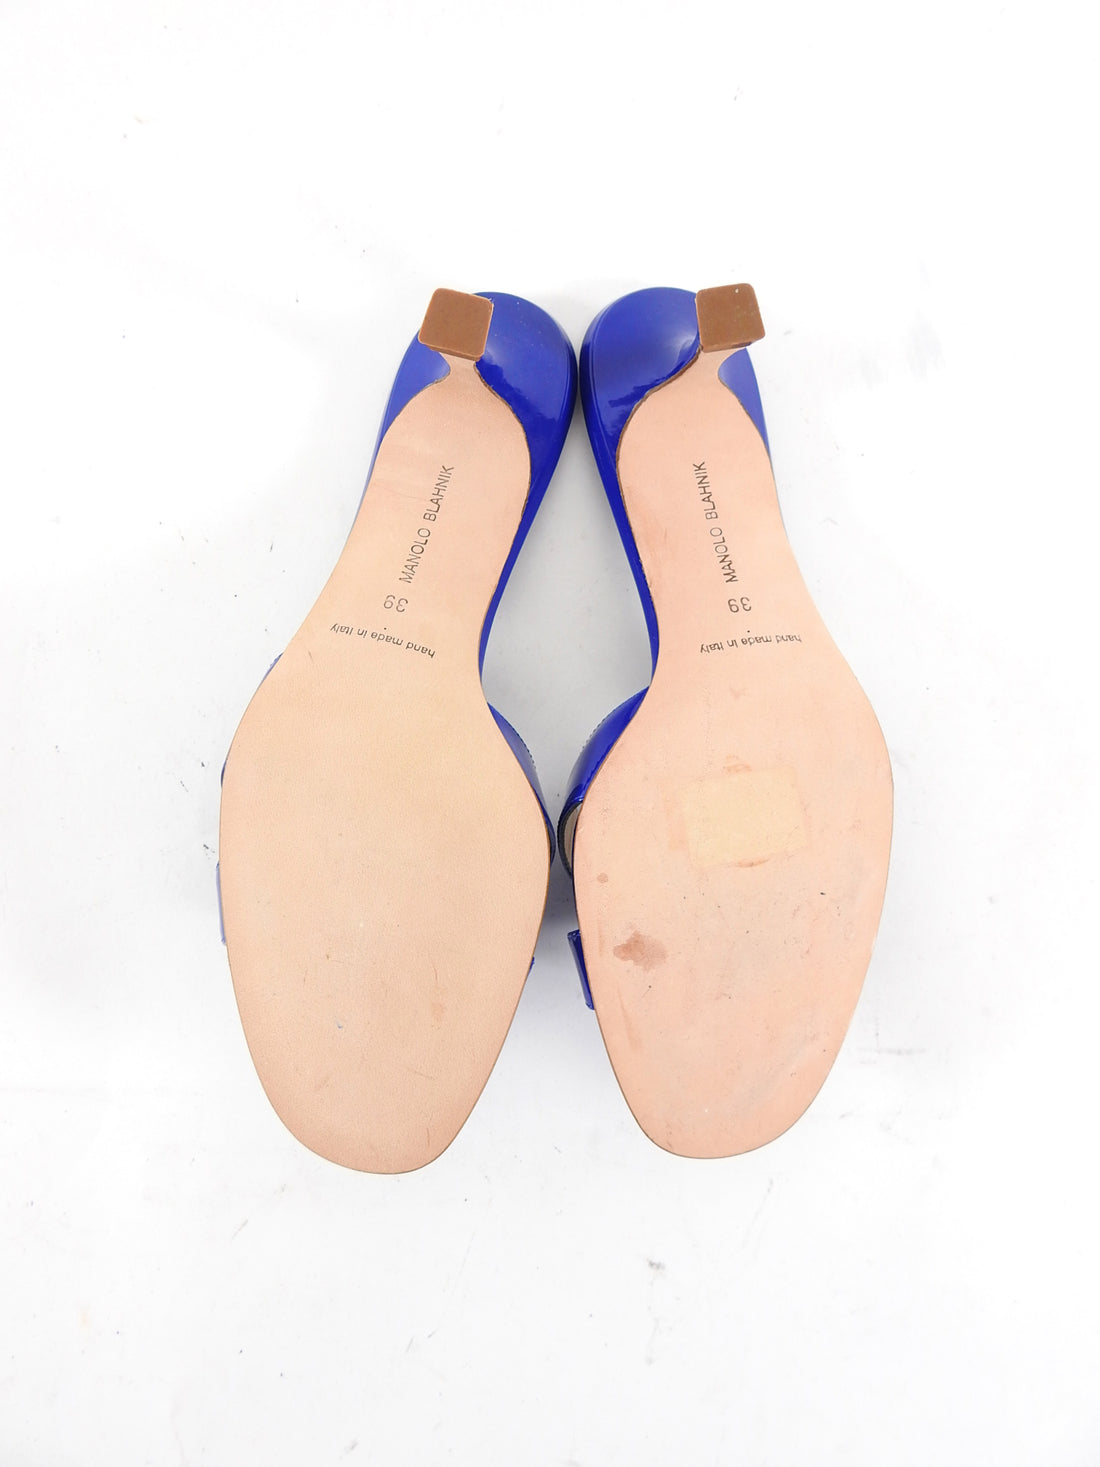 Manolo Blahnik Blue Patent Criss Cross Low Heel Sandals - 39 / 8.5